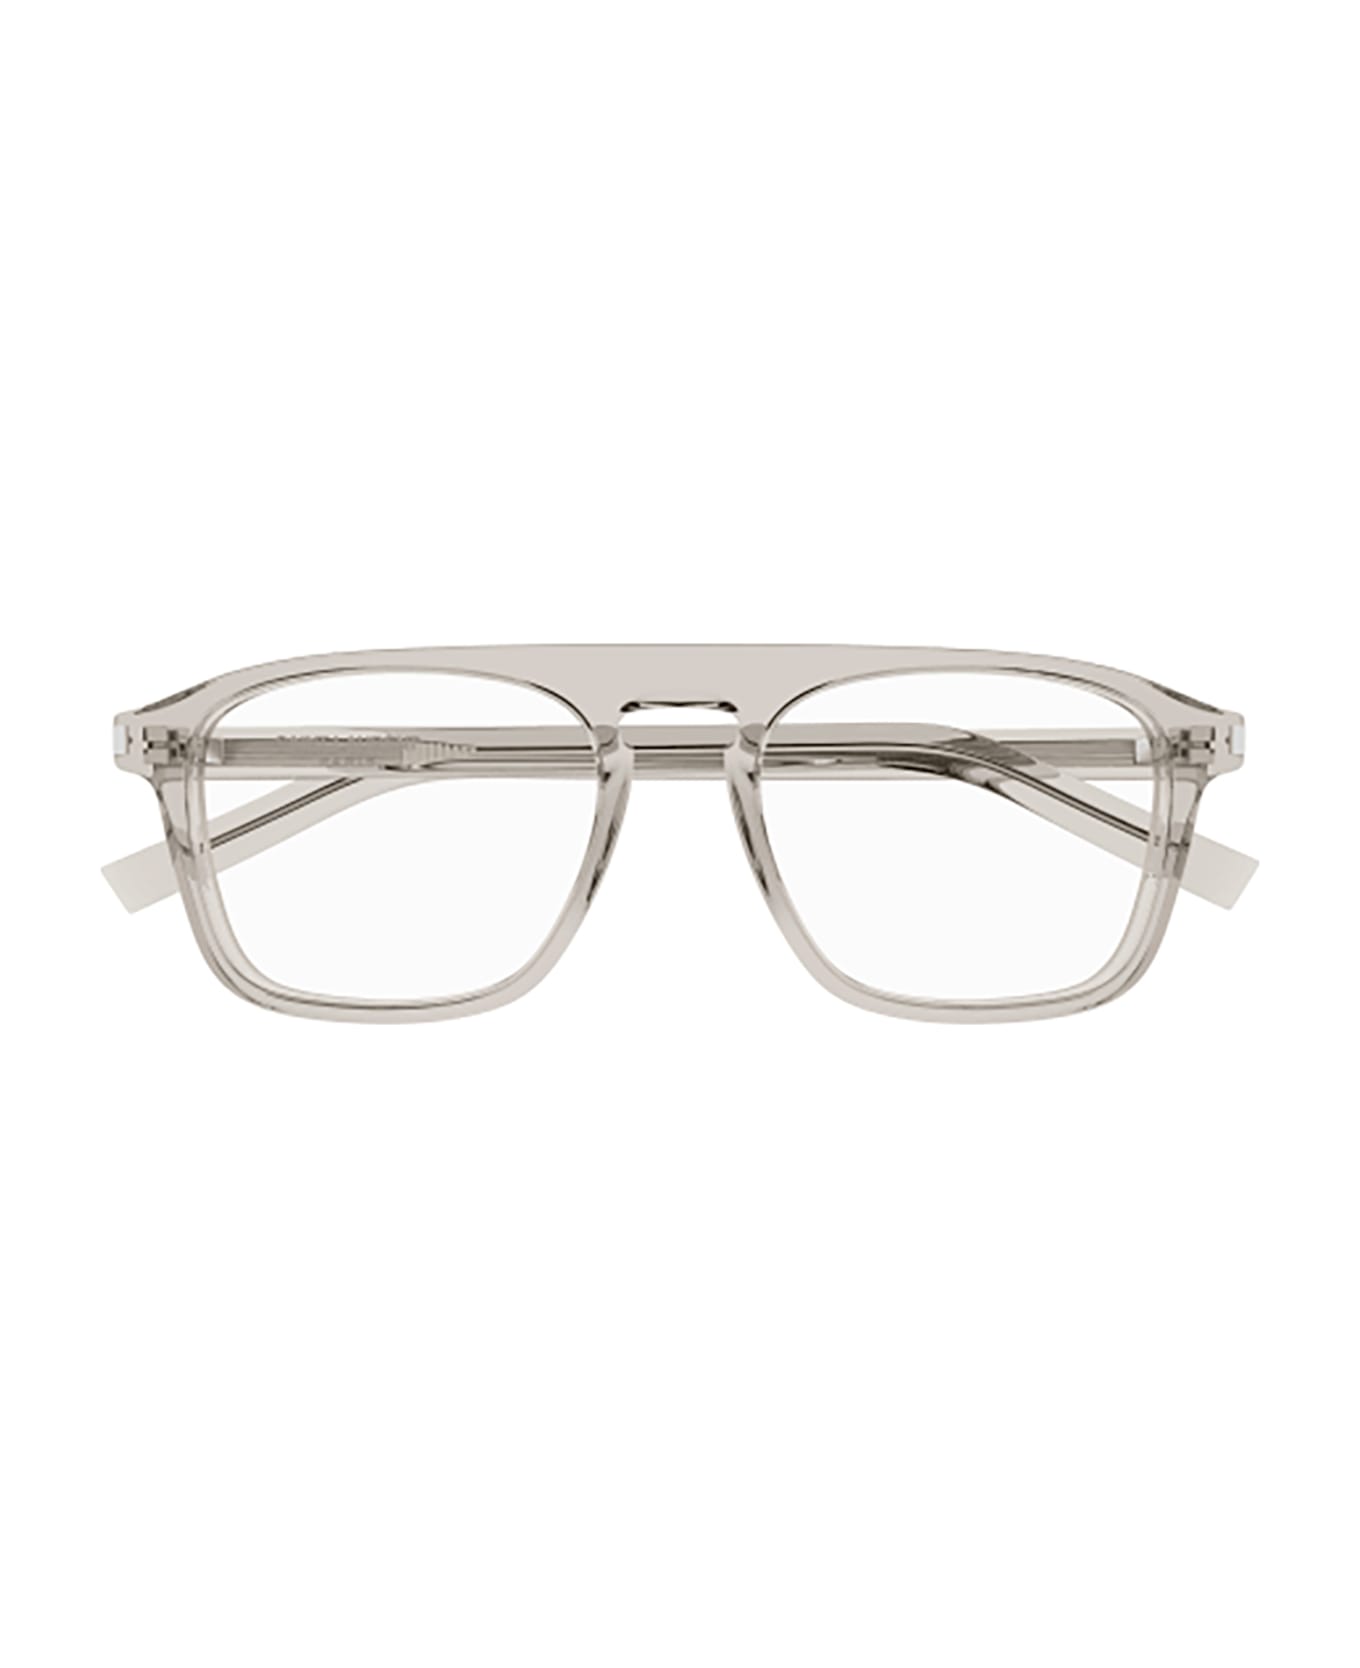 Saint Laurent Eyewear SL 157 Eyewear - Beige Beige Transpare